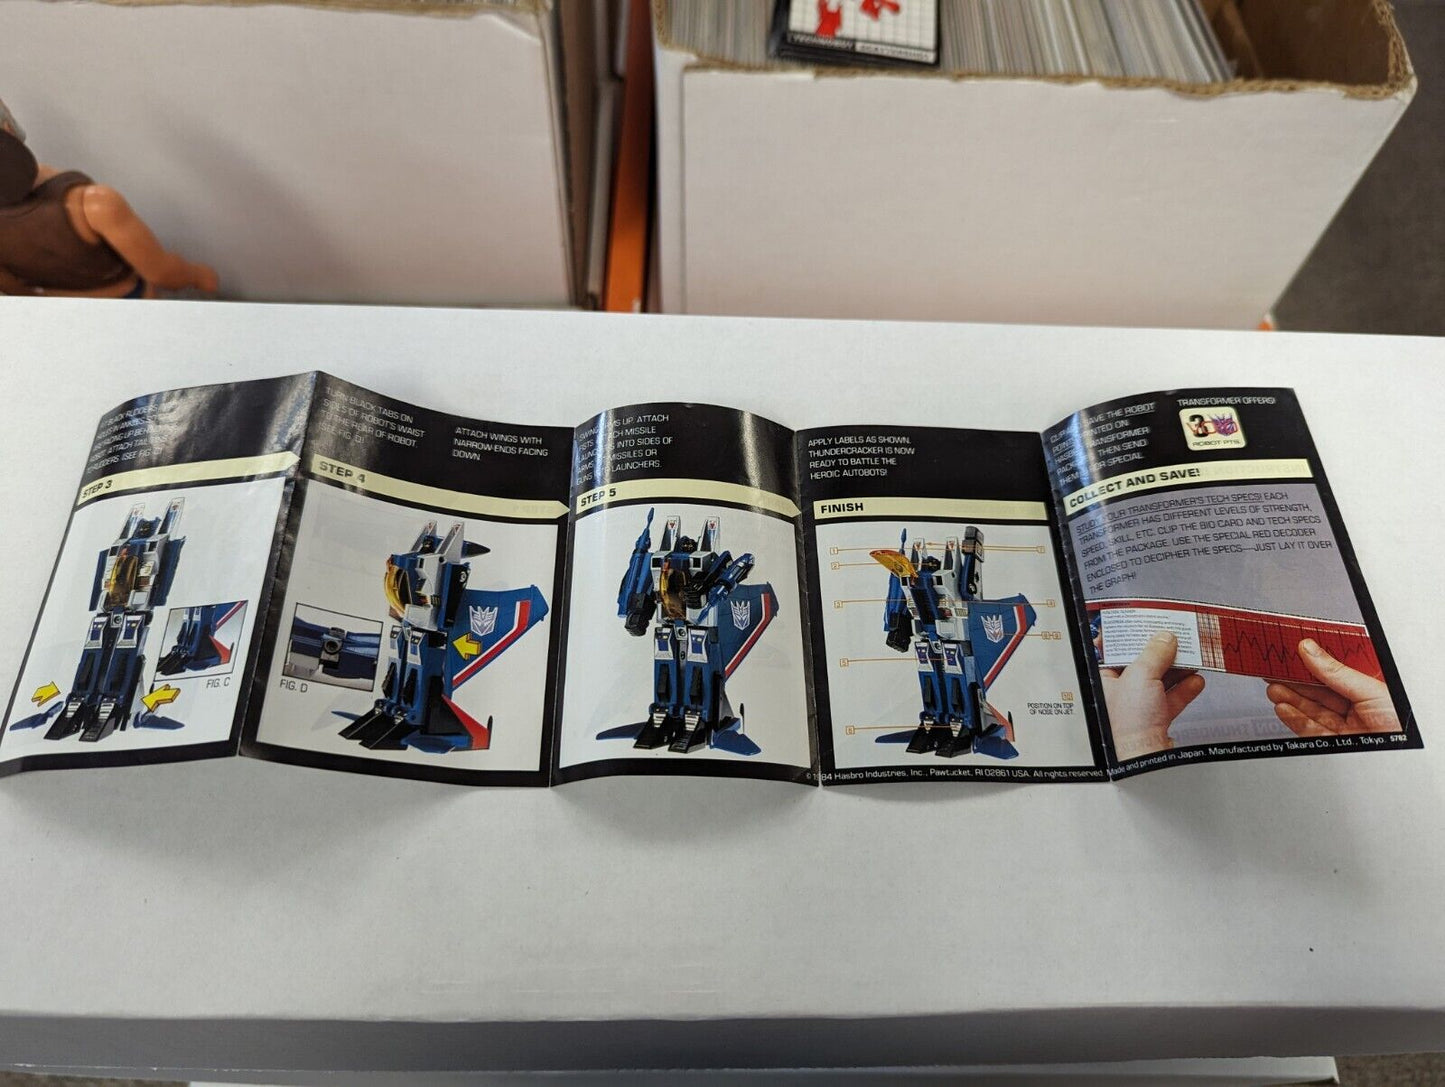 Transformers Thundercracker Instruction Booklet Only 1984